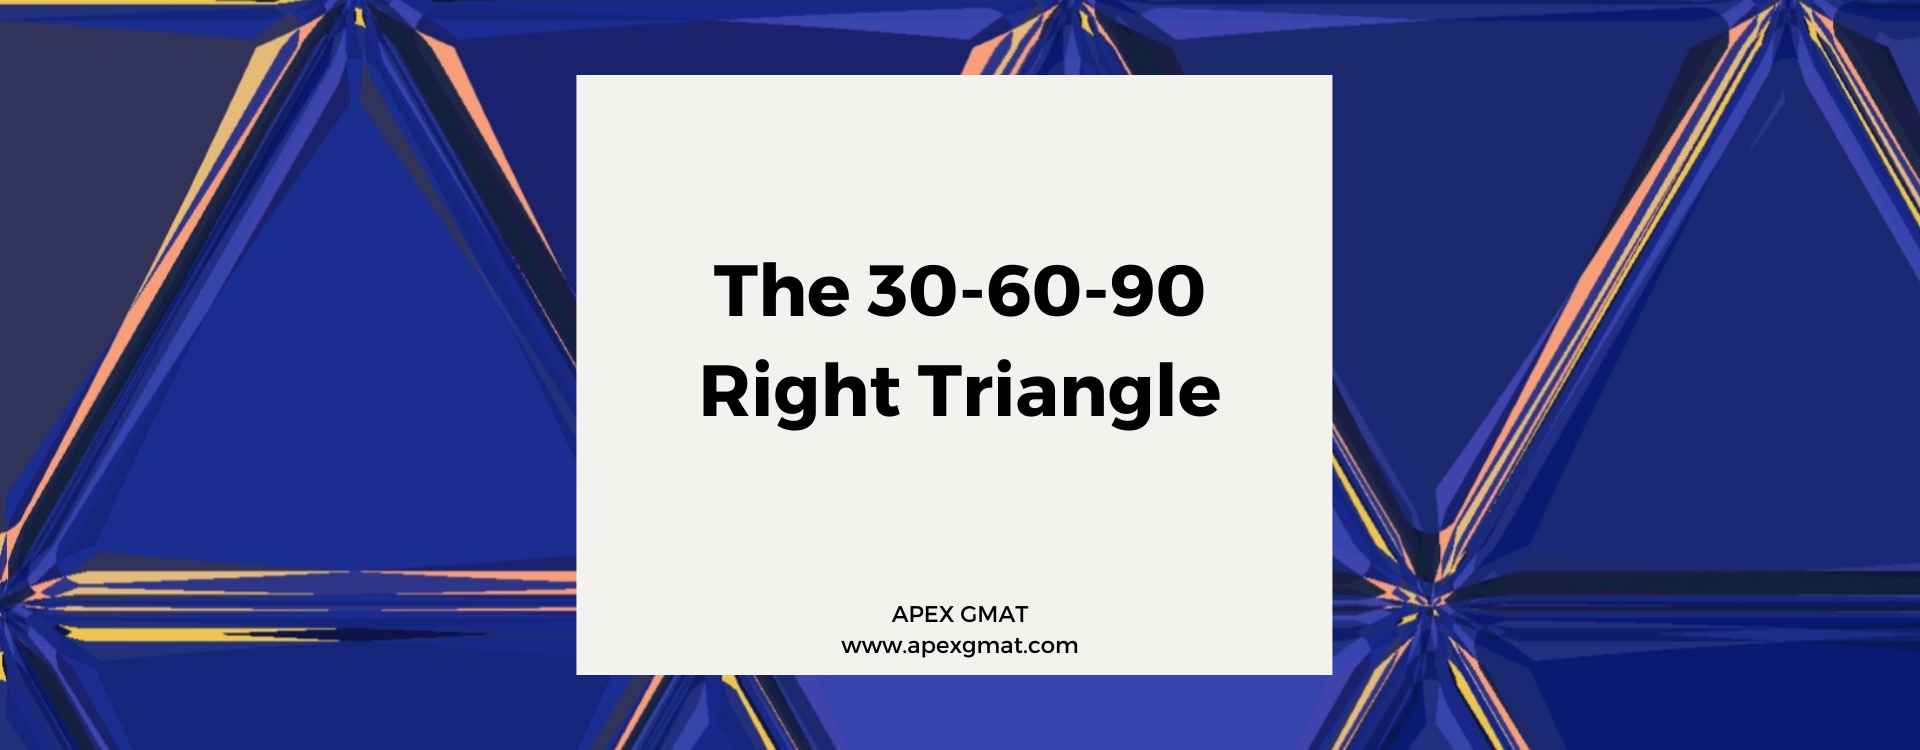 The 30-60-90 Right Triangle